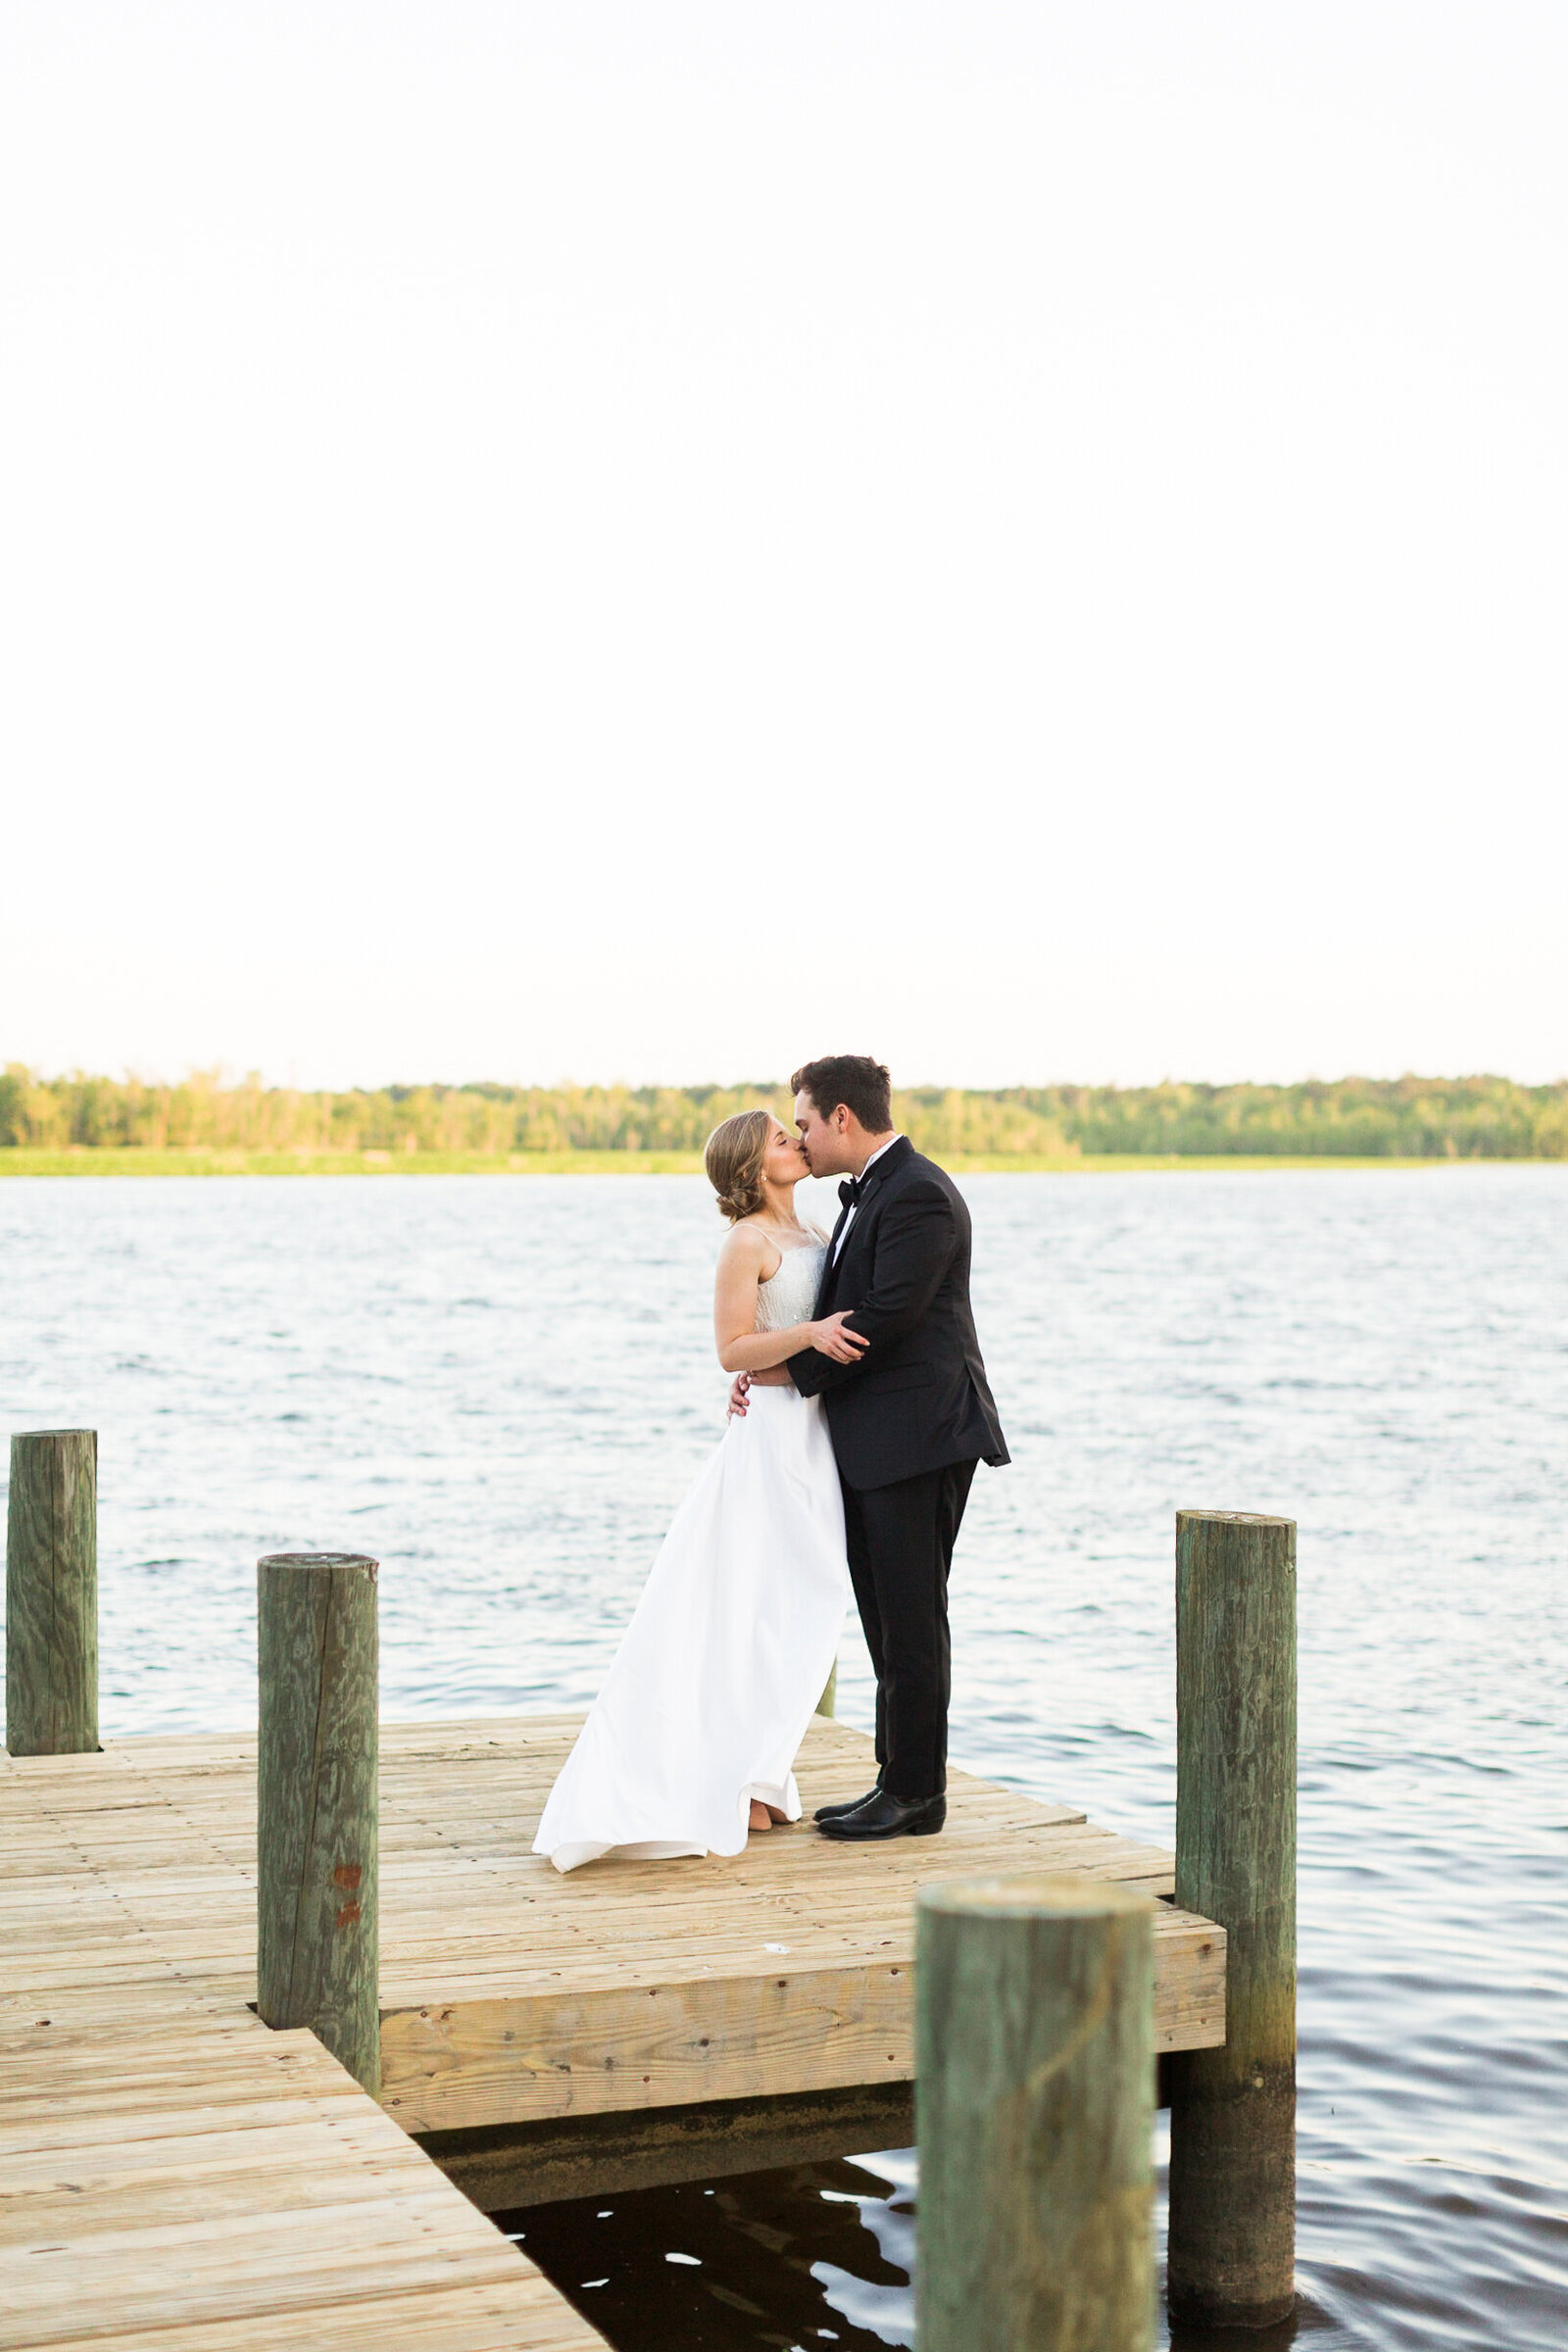 Private riverside estate wedding on the river in Virginia